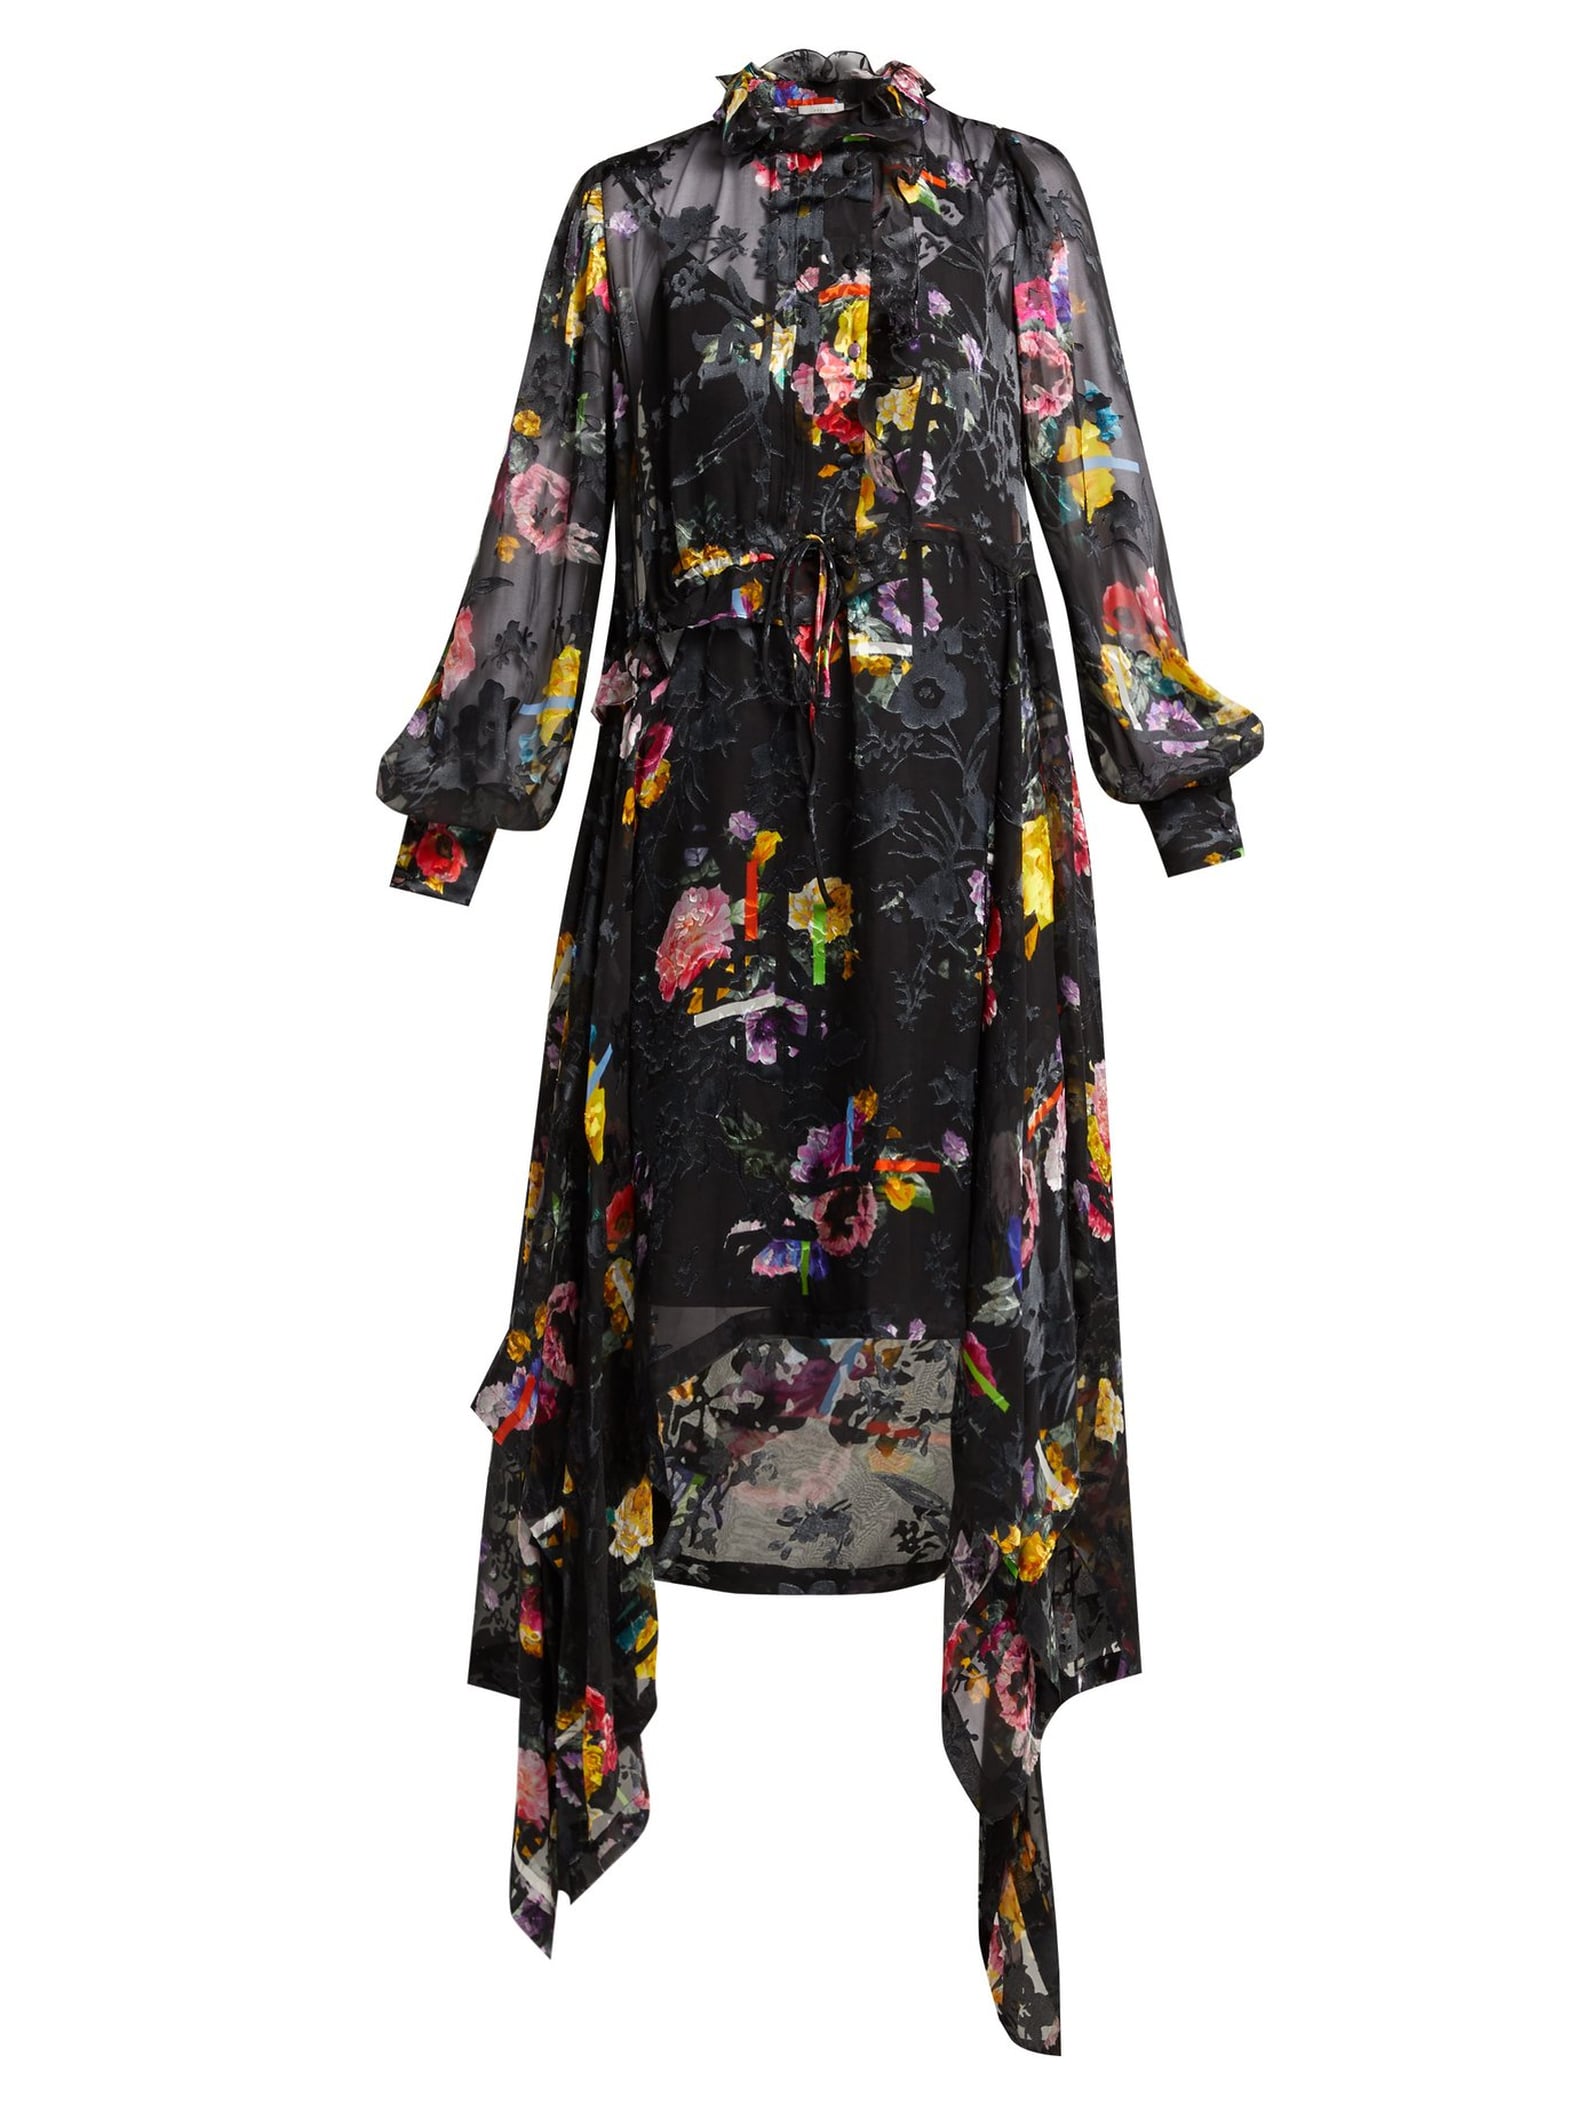 Princess Eugenie's Sheer Floral Dress | POPSUGAR Fashion